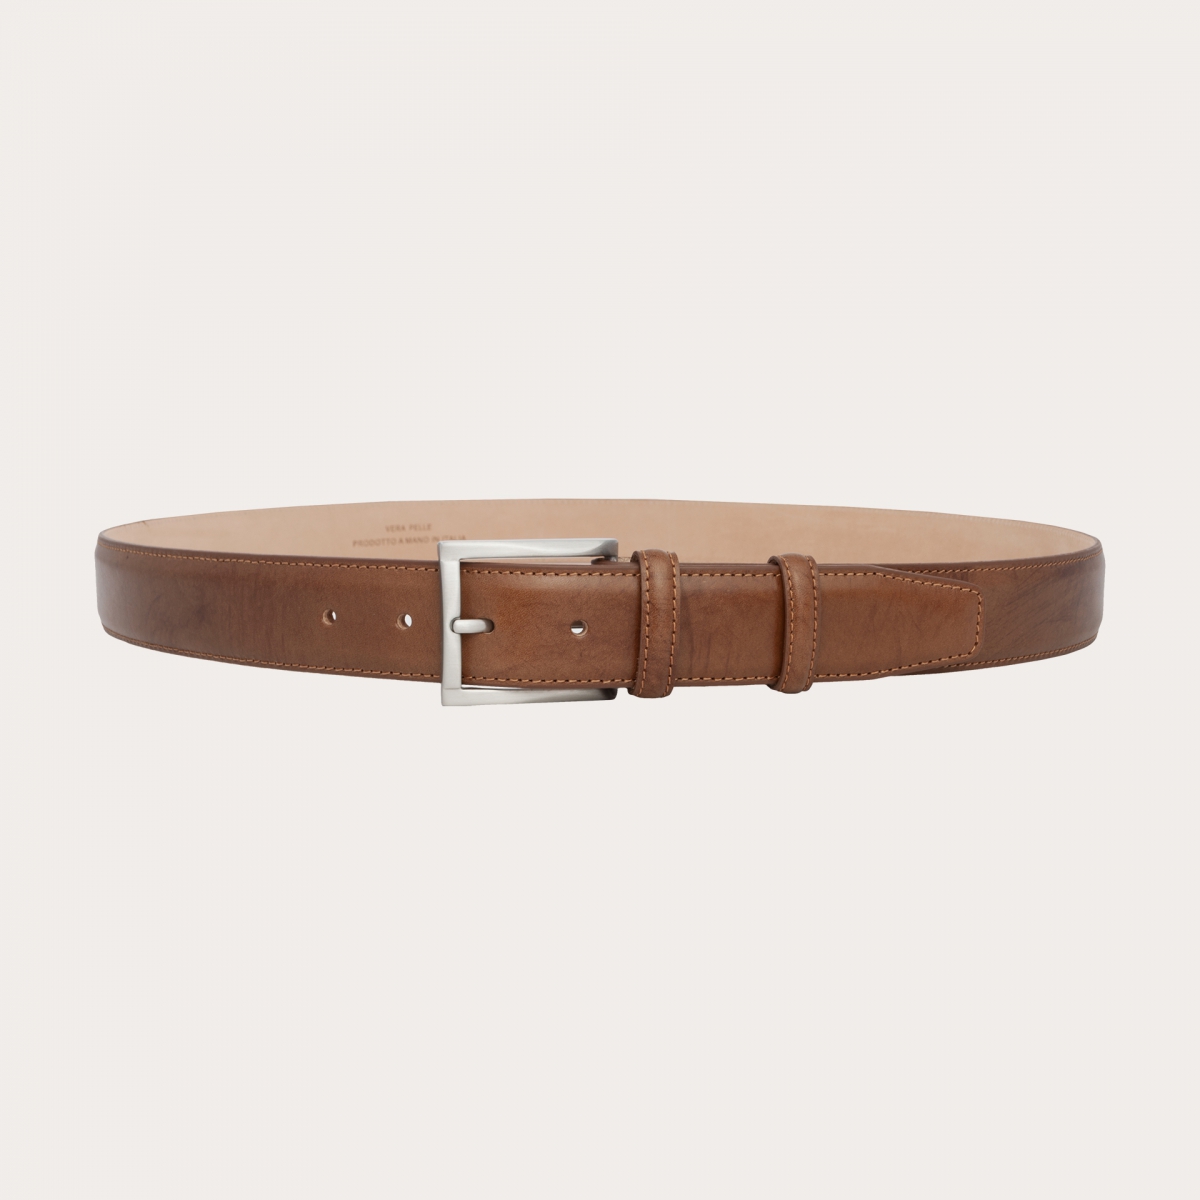 Refined belt in vegetal tanned leather, brown cognac